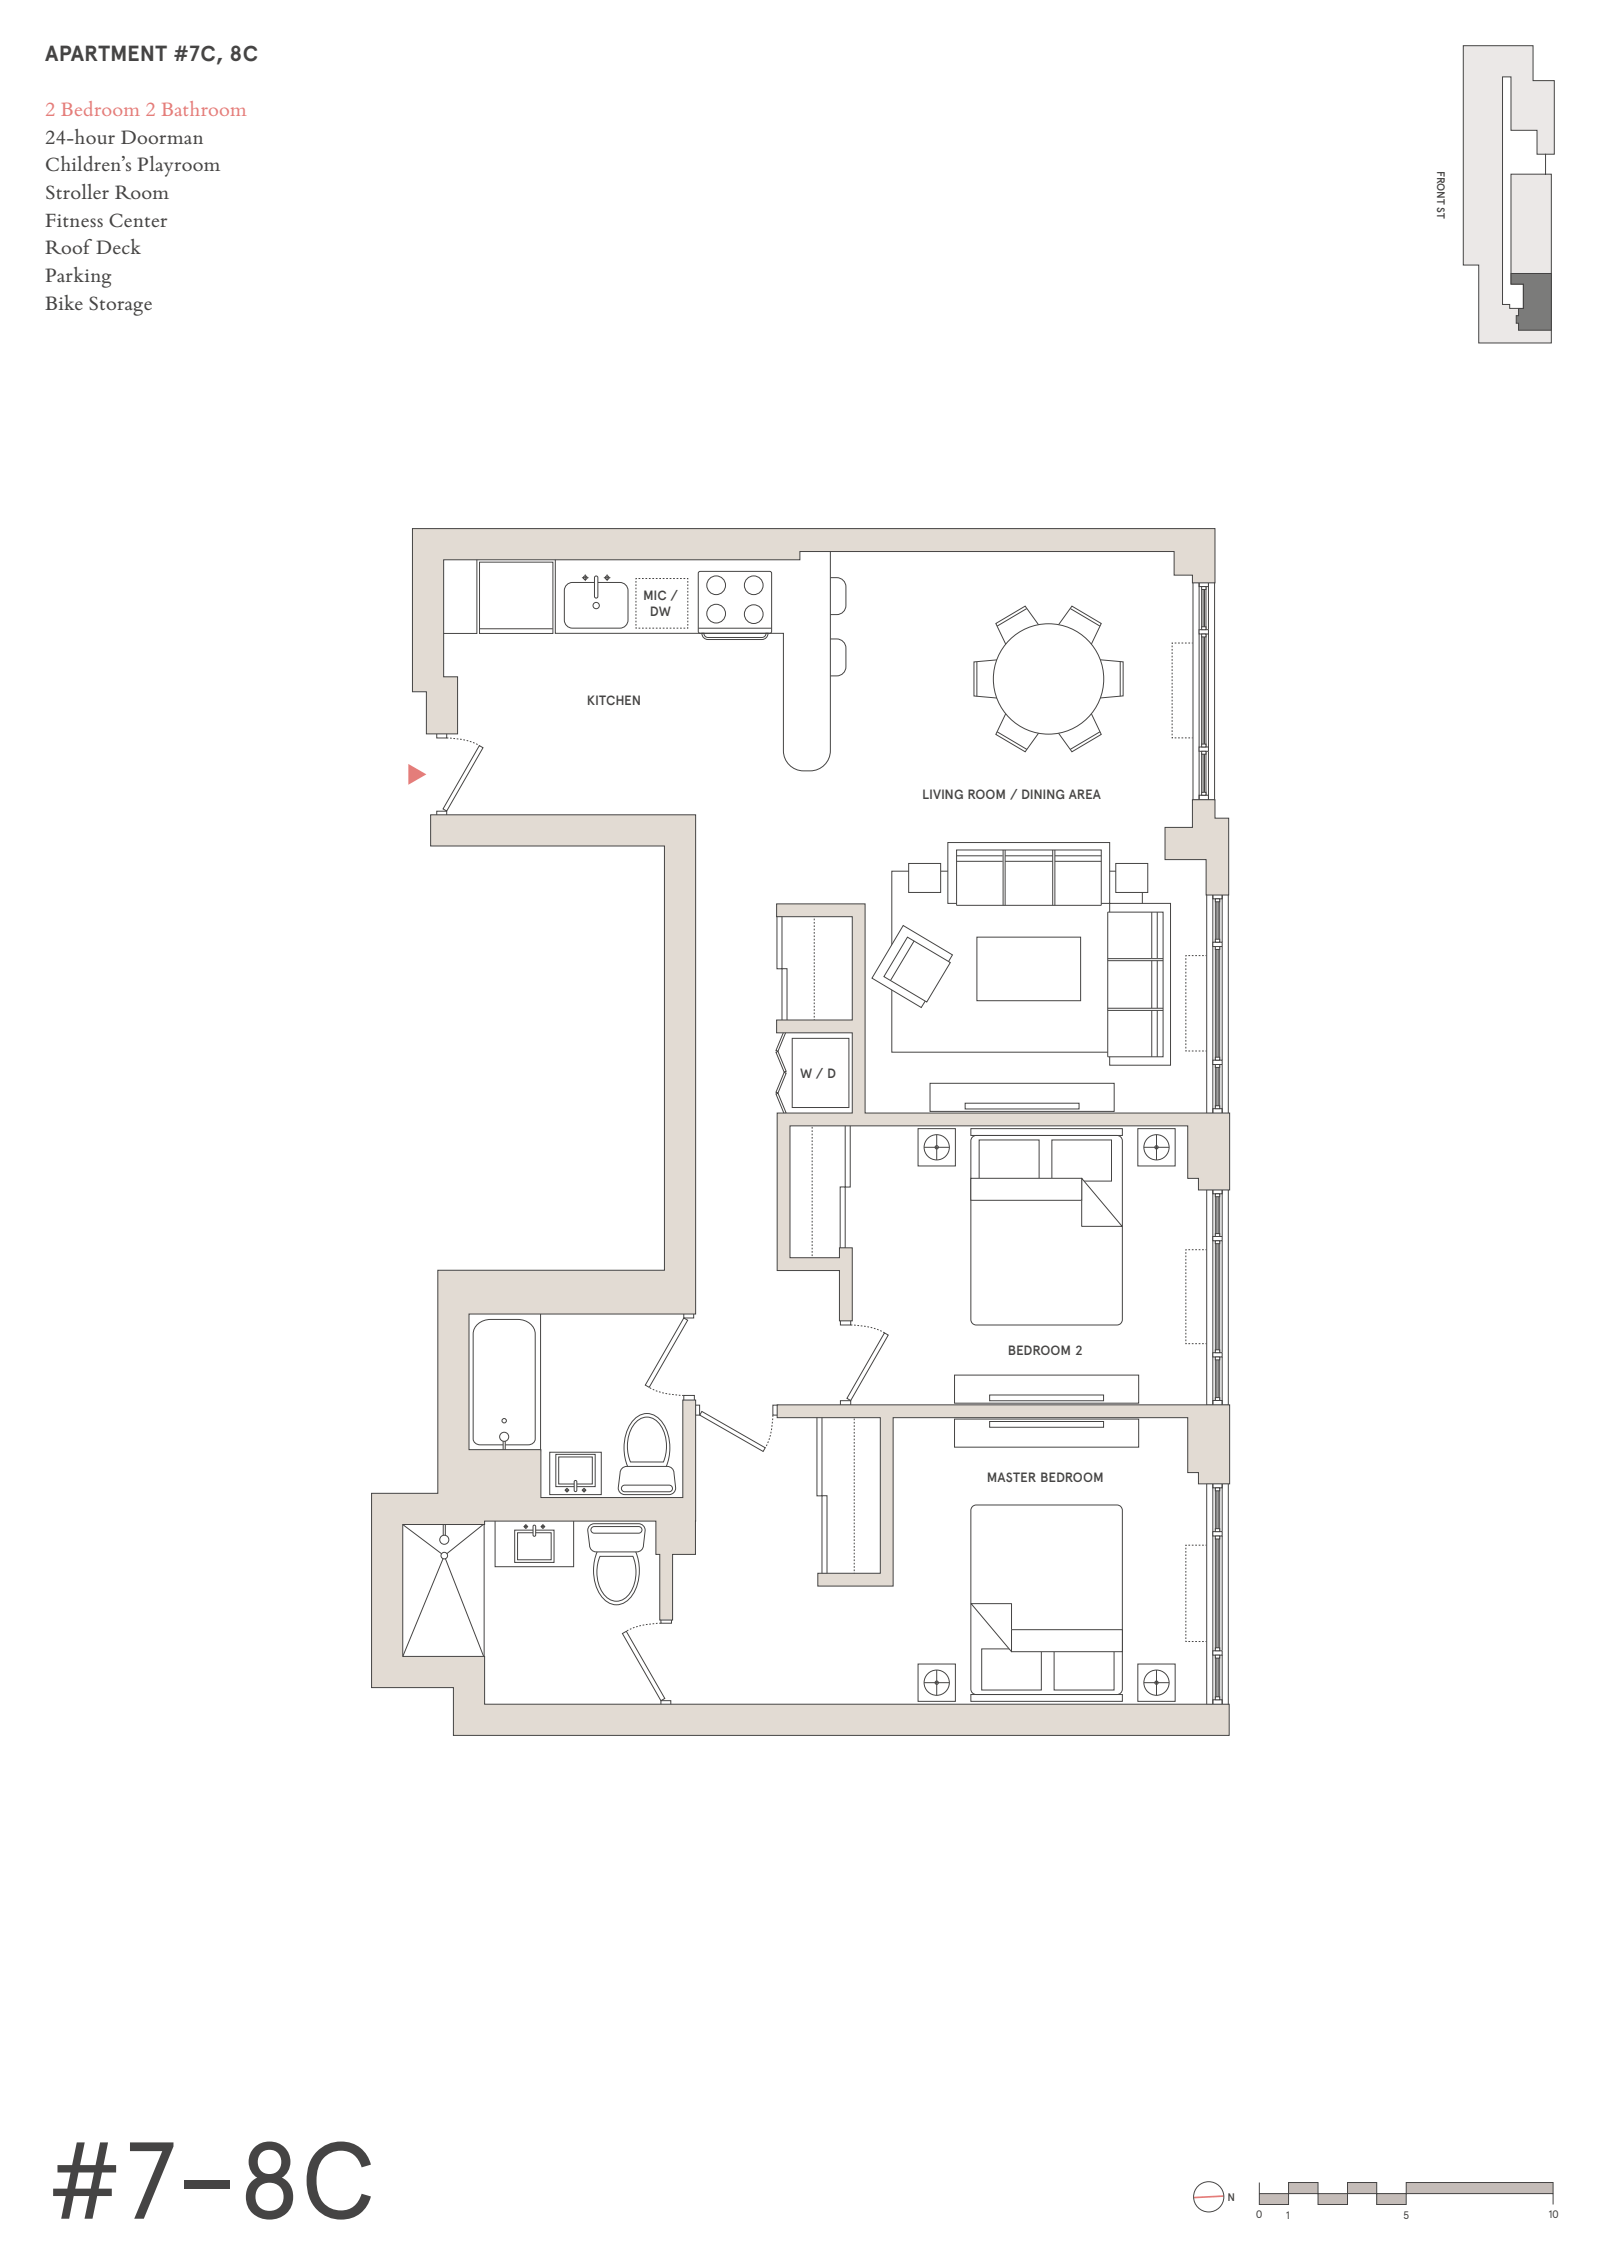 Floorplan for 181 Front Street, 8C